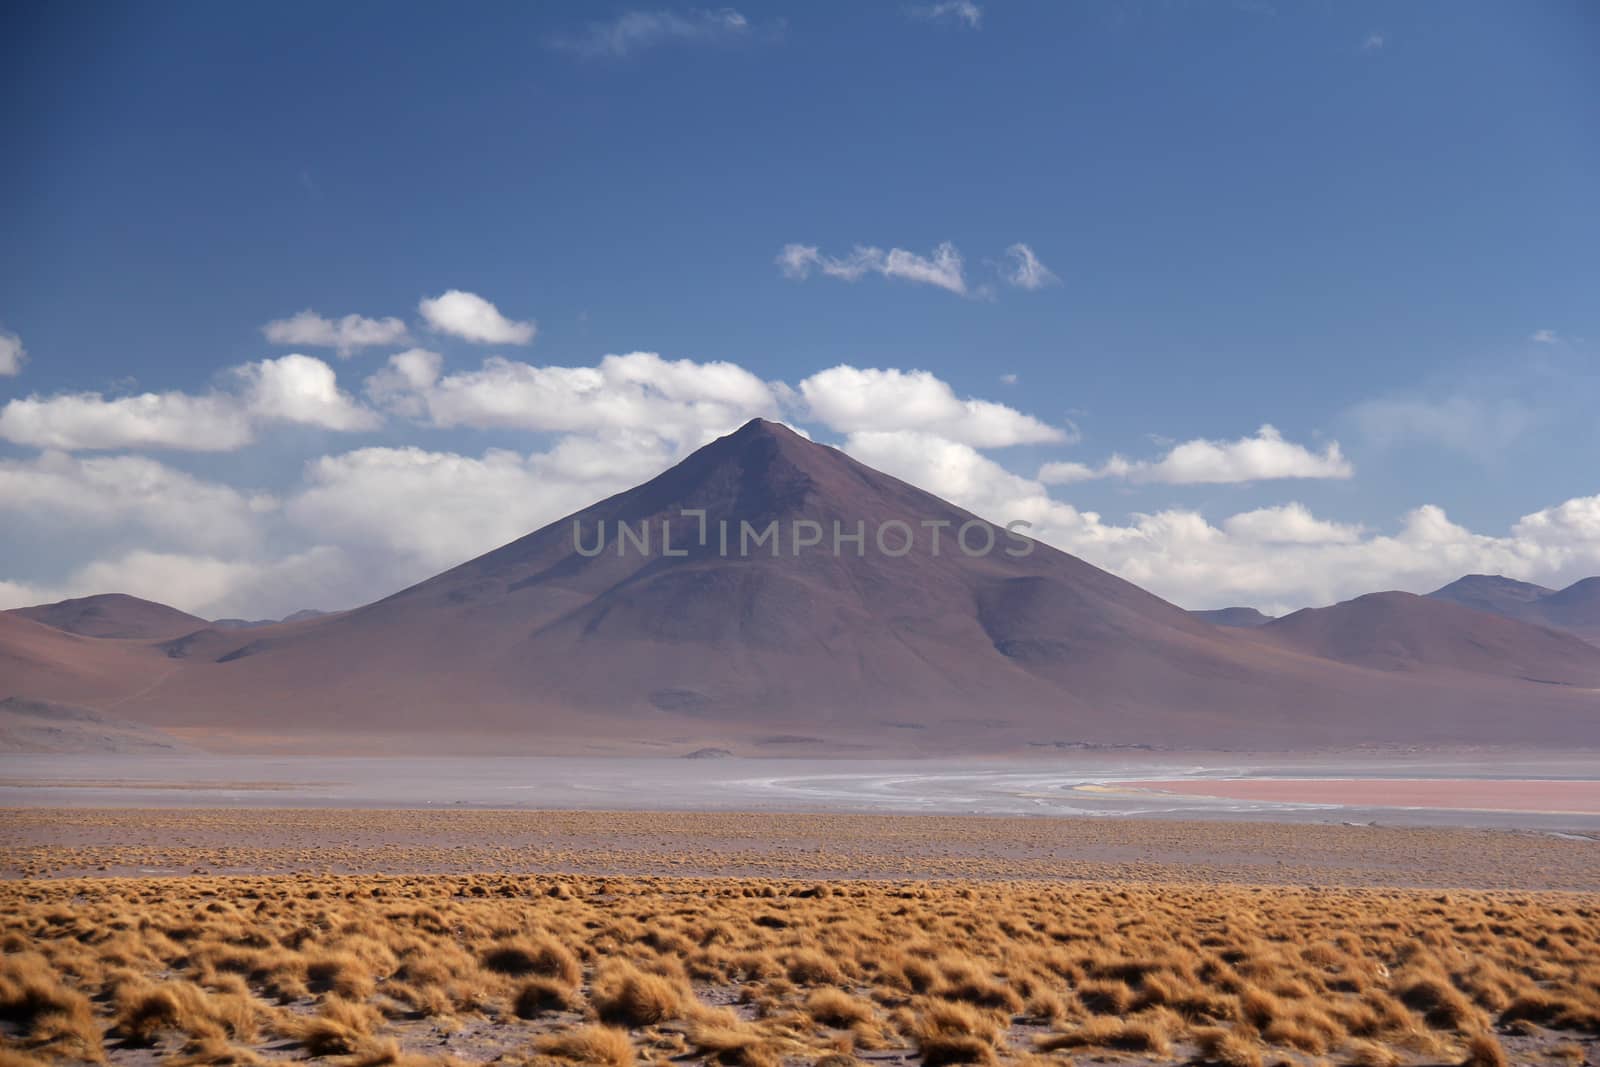 Salt desert Uyuni in Bolivia by Aarstudio